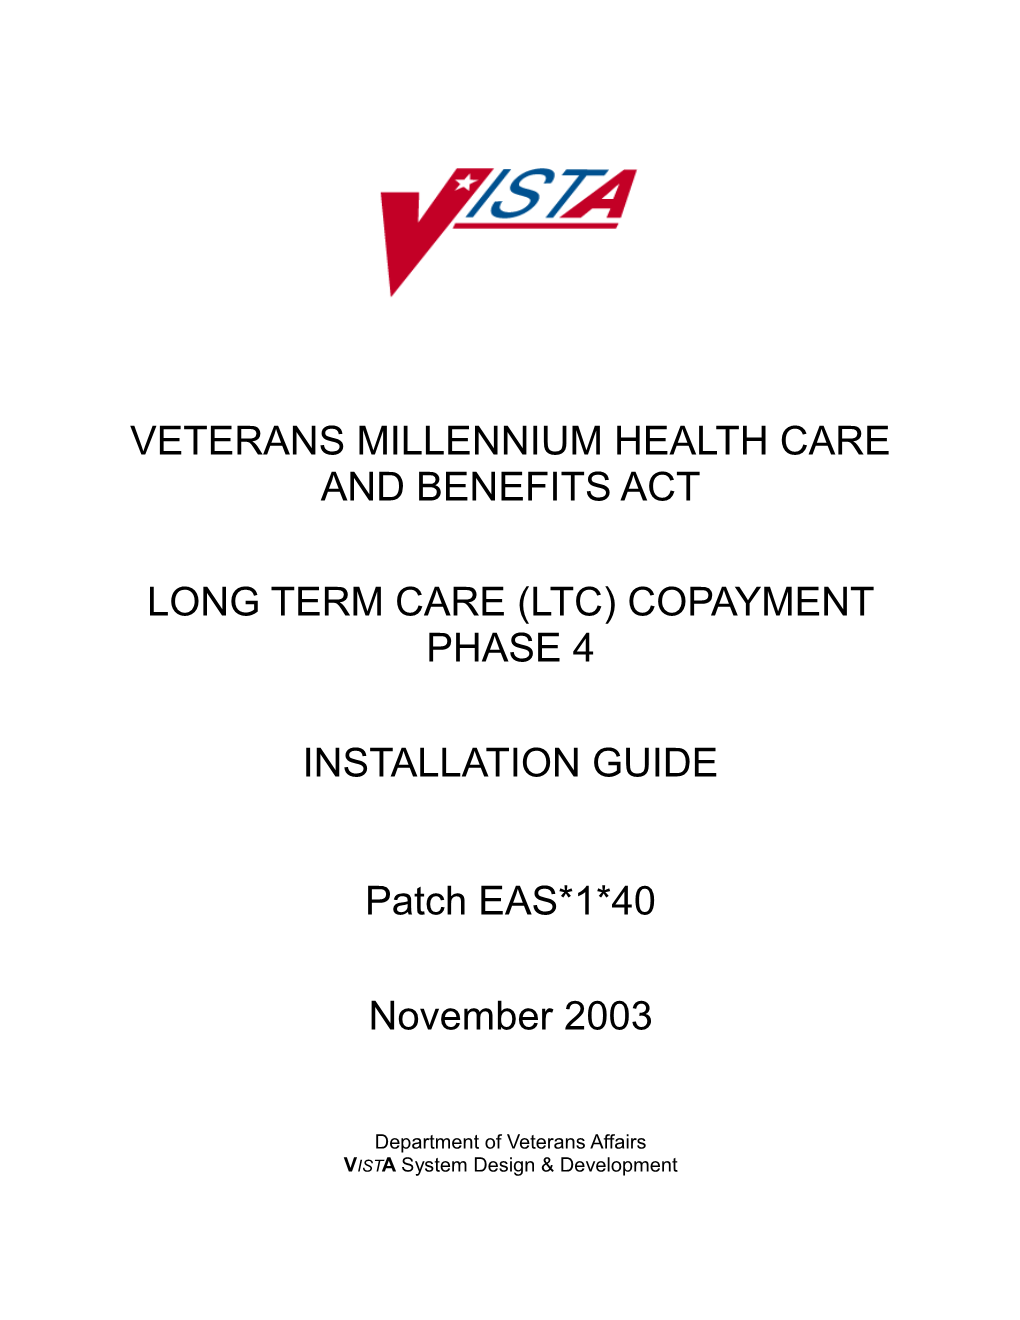 Veterans Millennium Health Care and Benefits Act